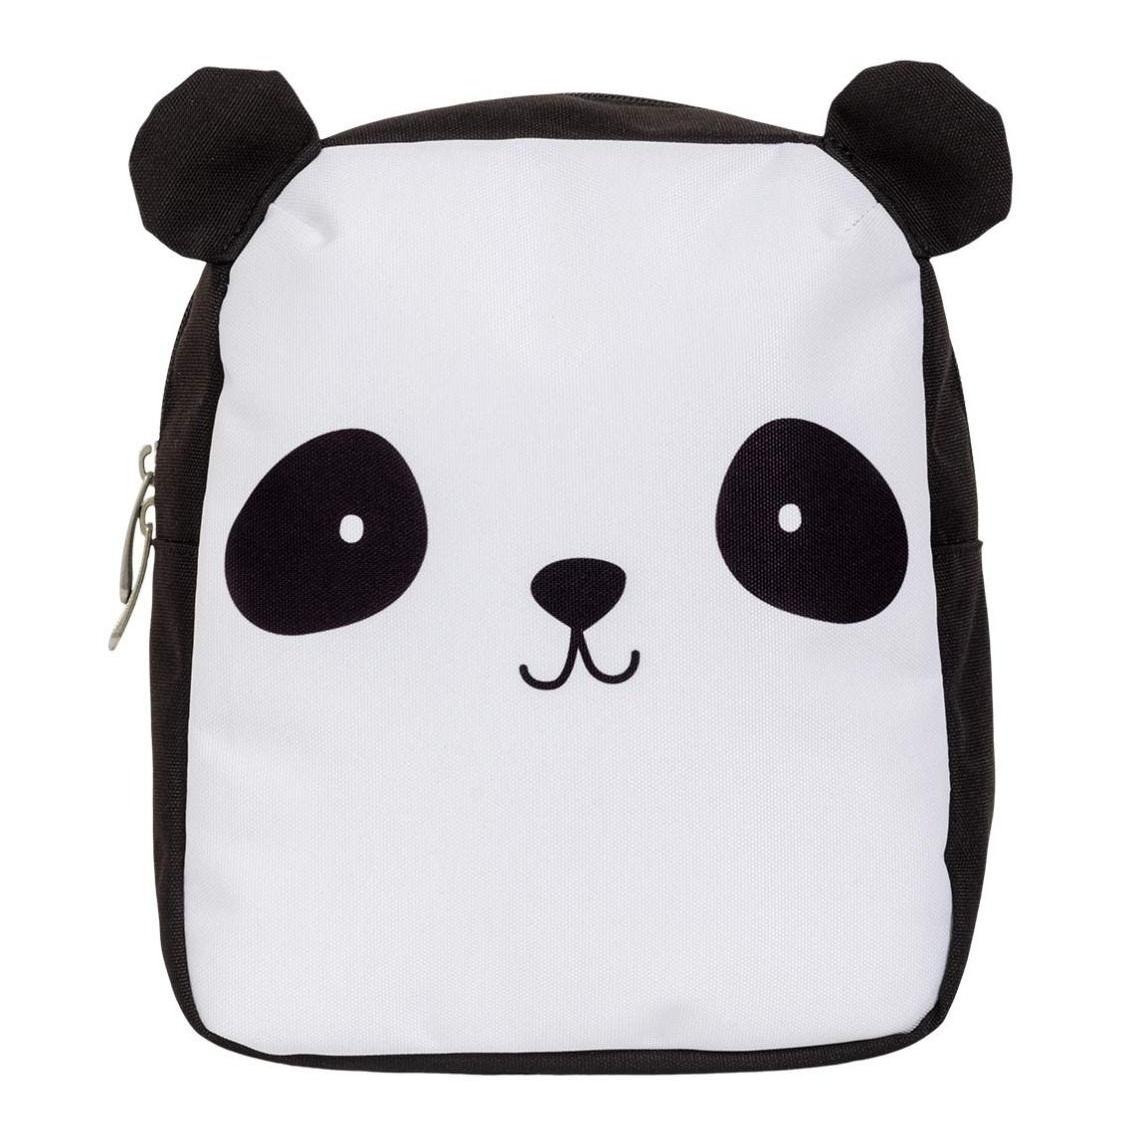 Рюкзак A Little Lovely Company "Панда", черно-белый, маленький